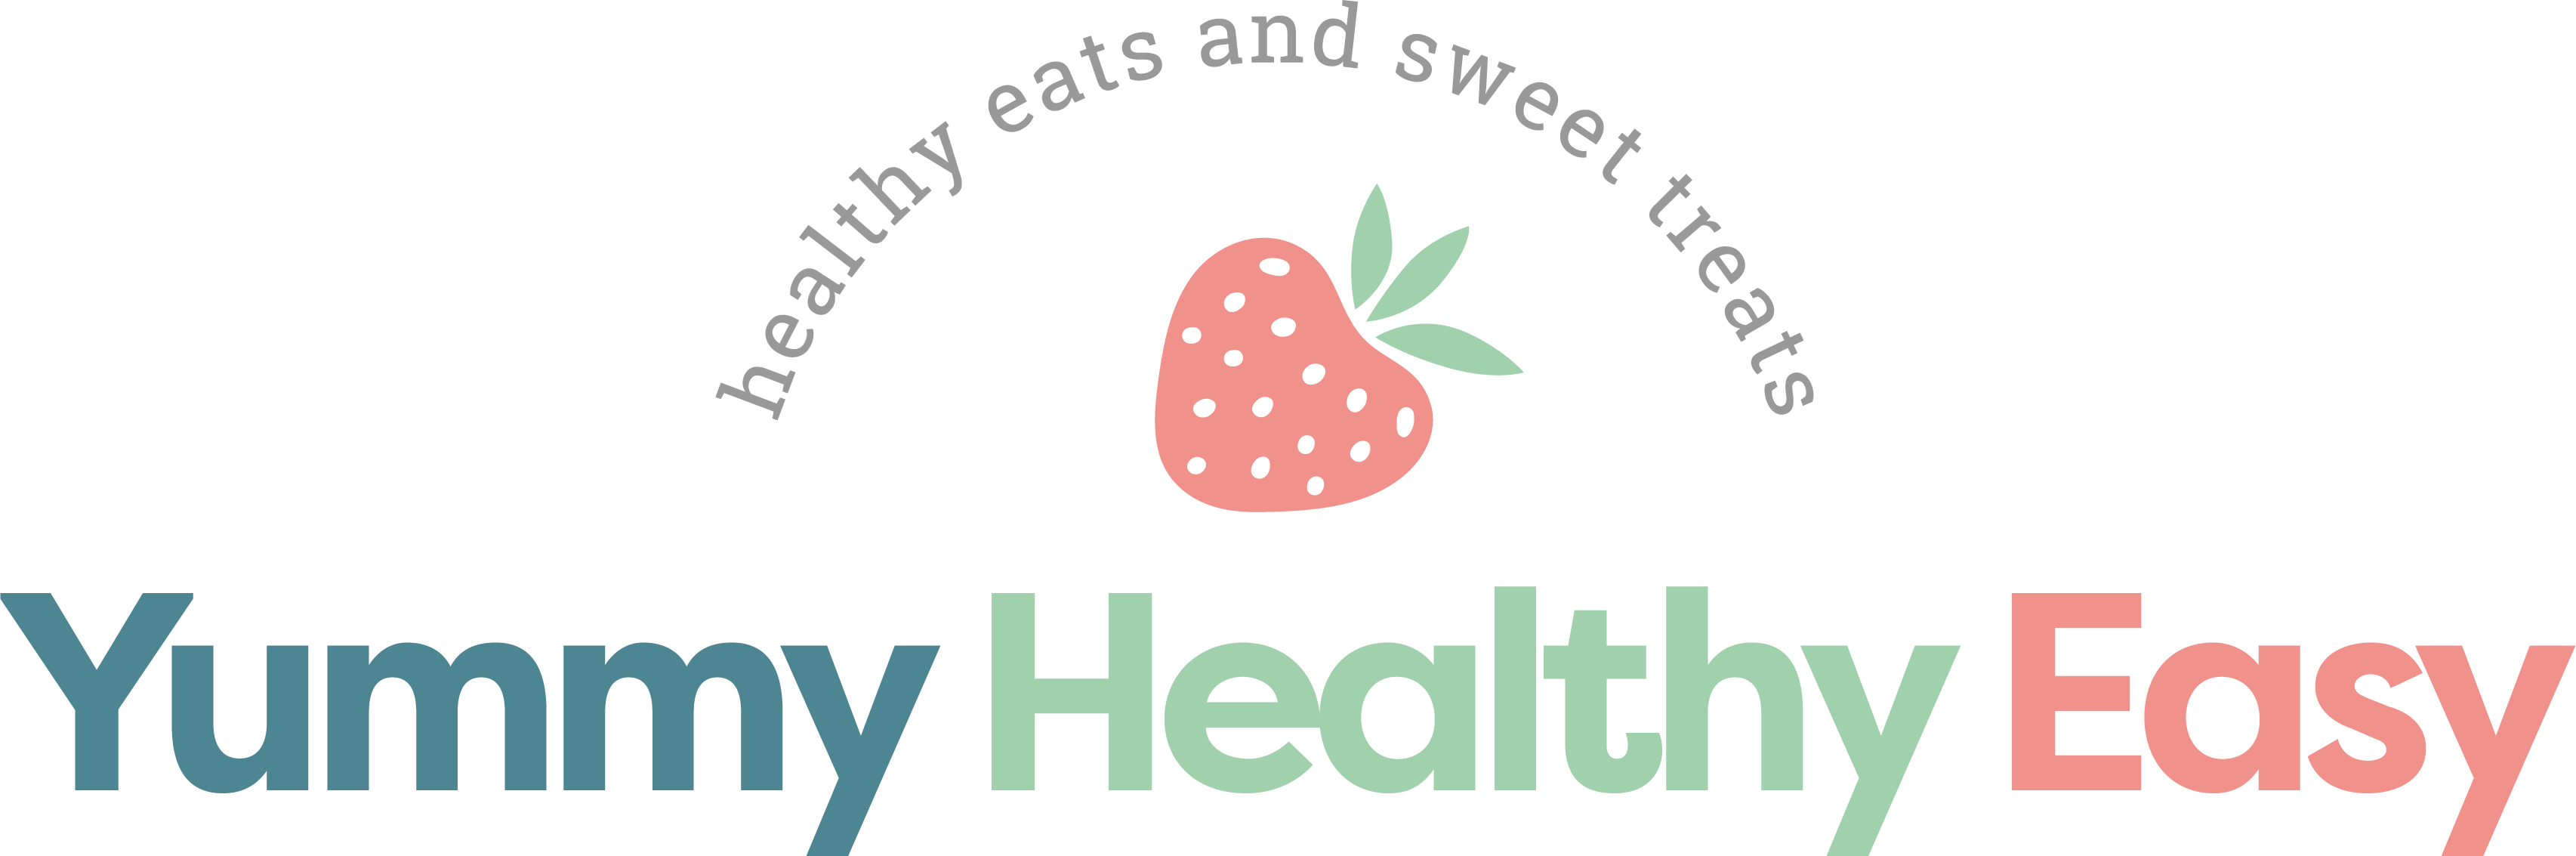 Healthy Eats & Sweet Treats - Yummy Healthy Easy